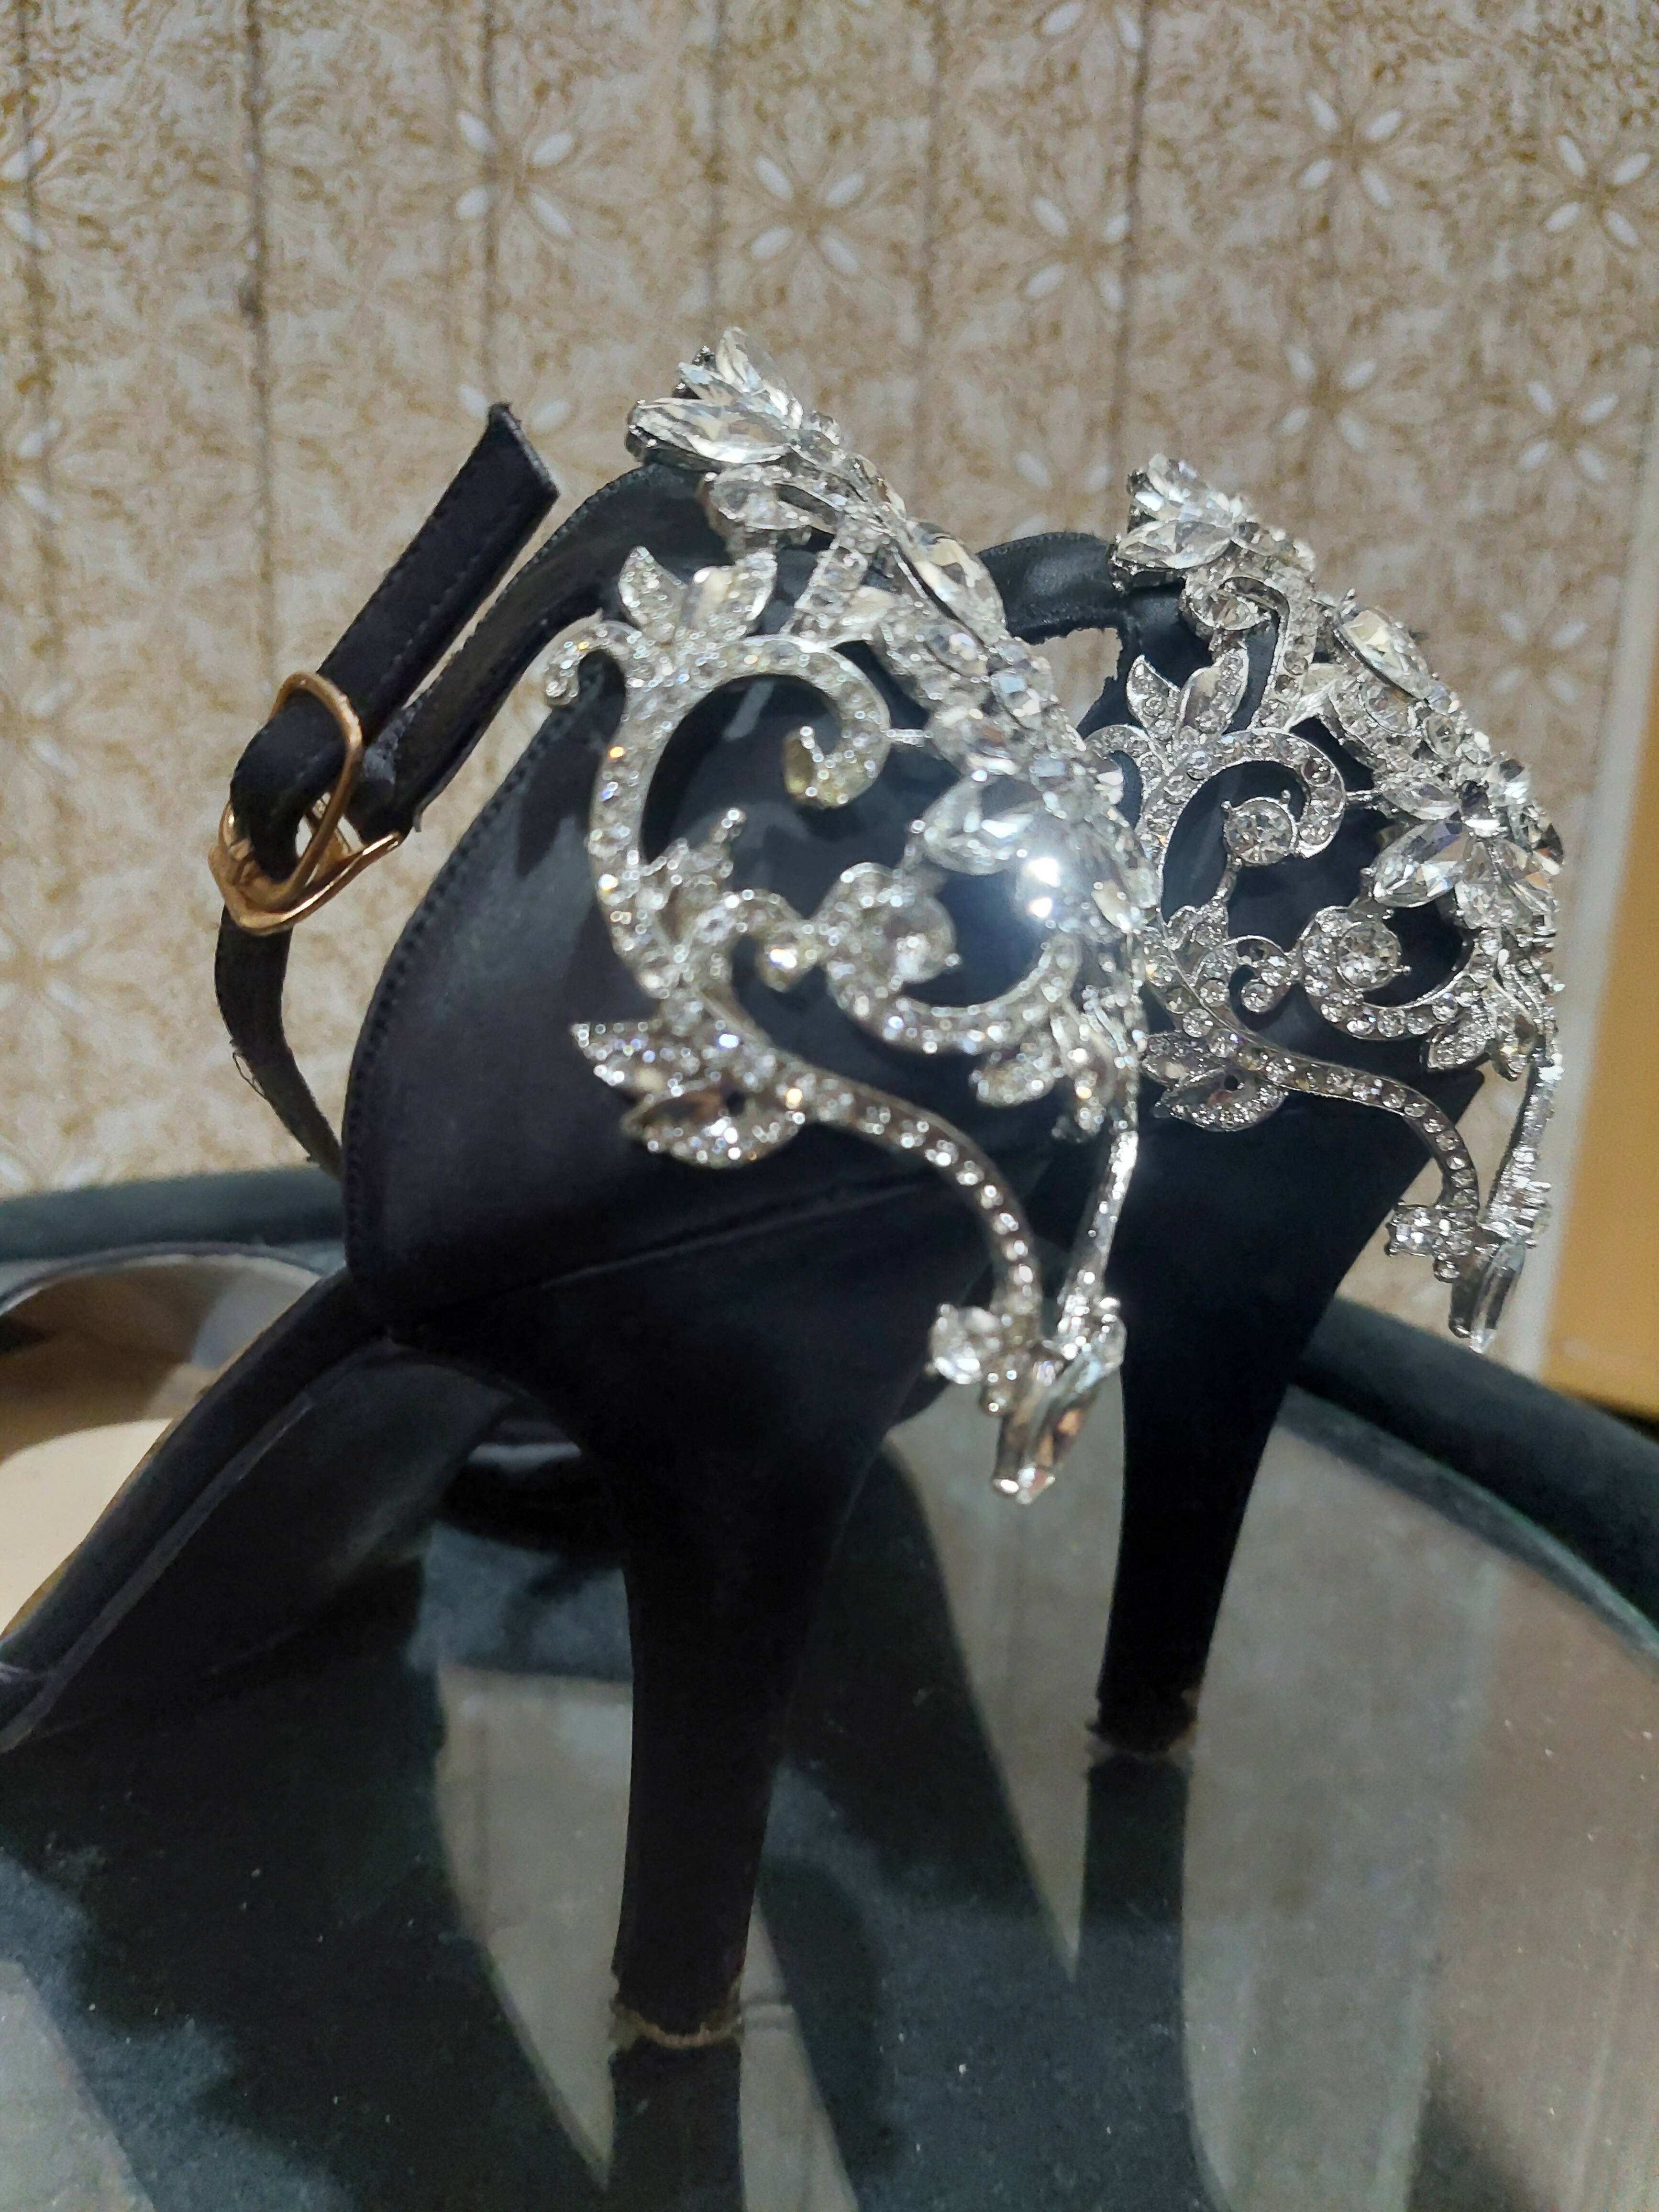 Black pump heels | Women Shoes | Brand New